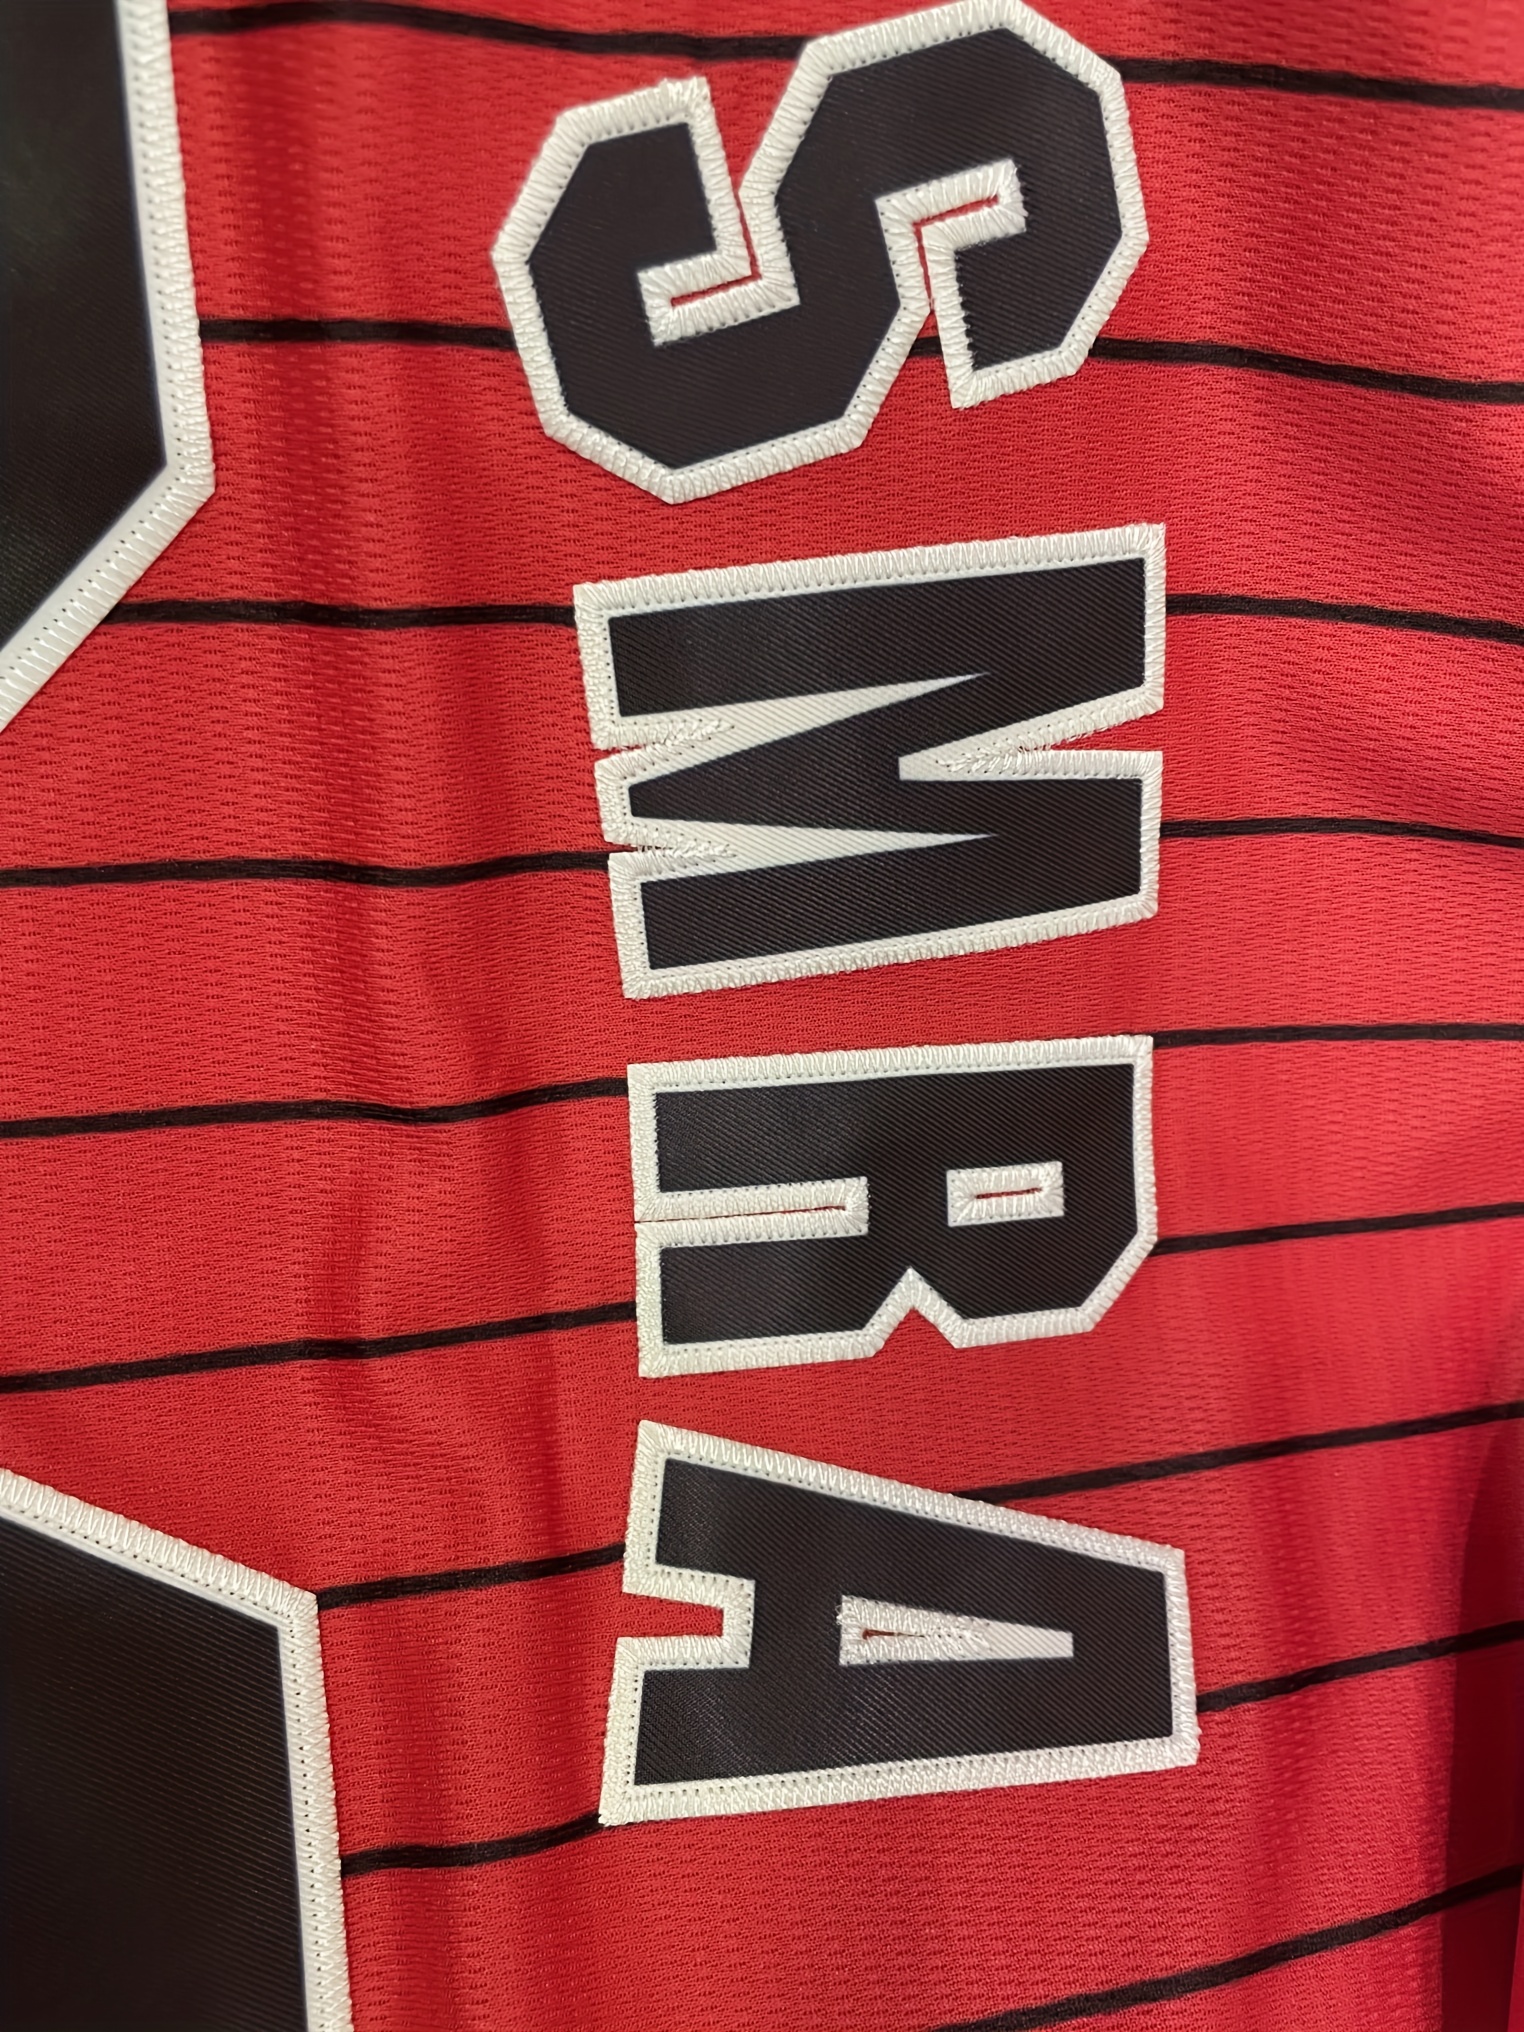 Men's Baseball Jersey 90s Shirts Fans Clothing Hip Hop Stitched Baseball  Jersey Sports Button Down Shirts 